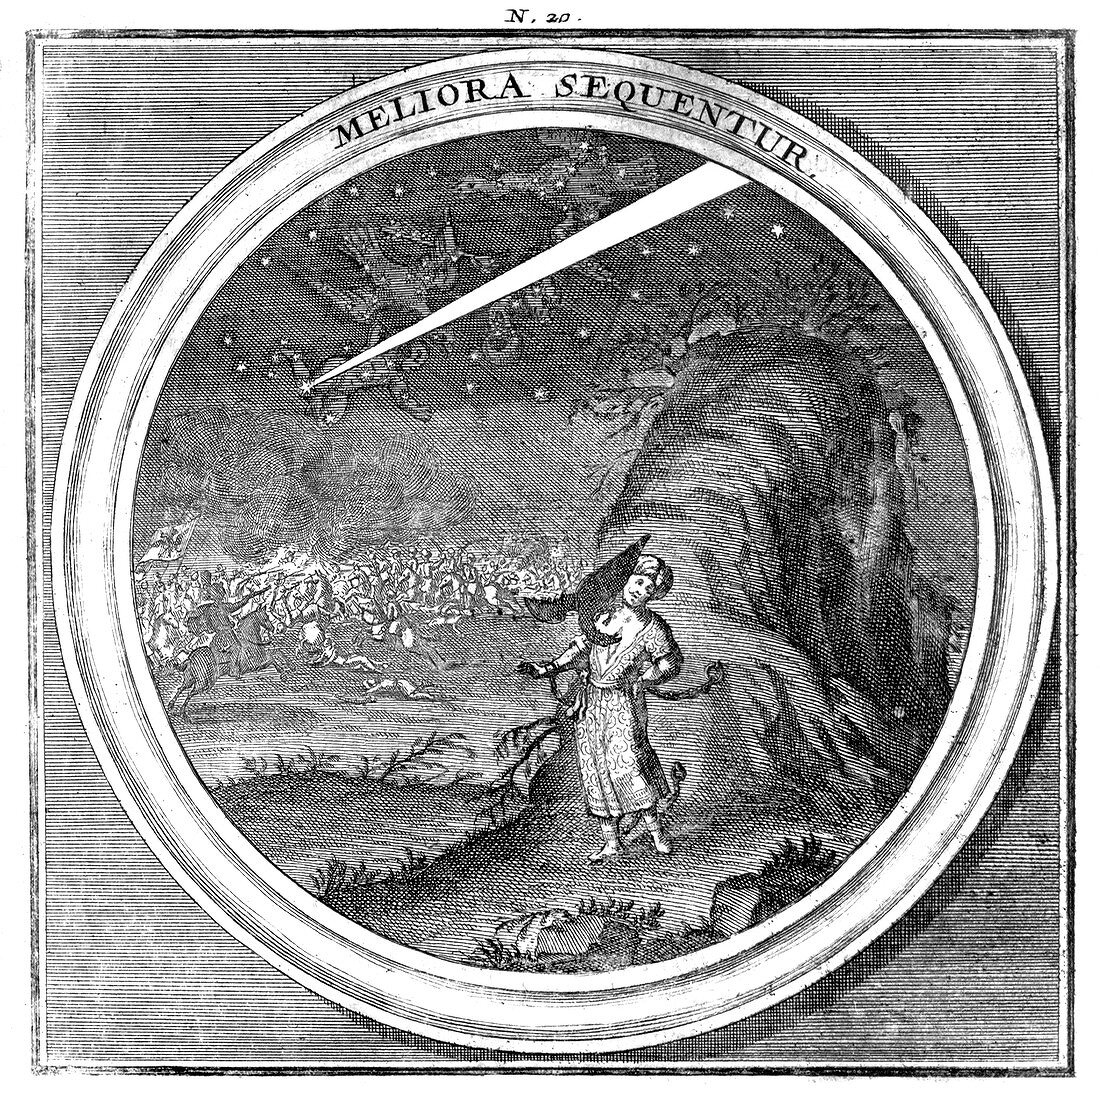 Meteorologia, Celestial Event, 1709